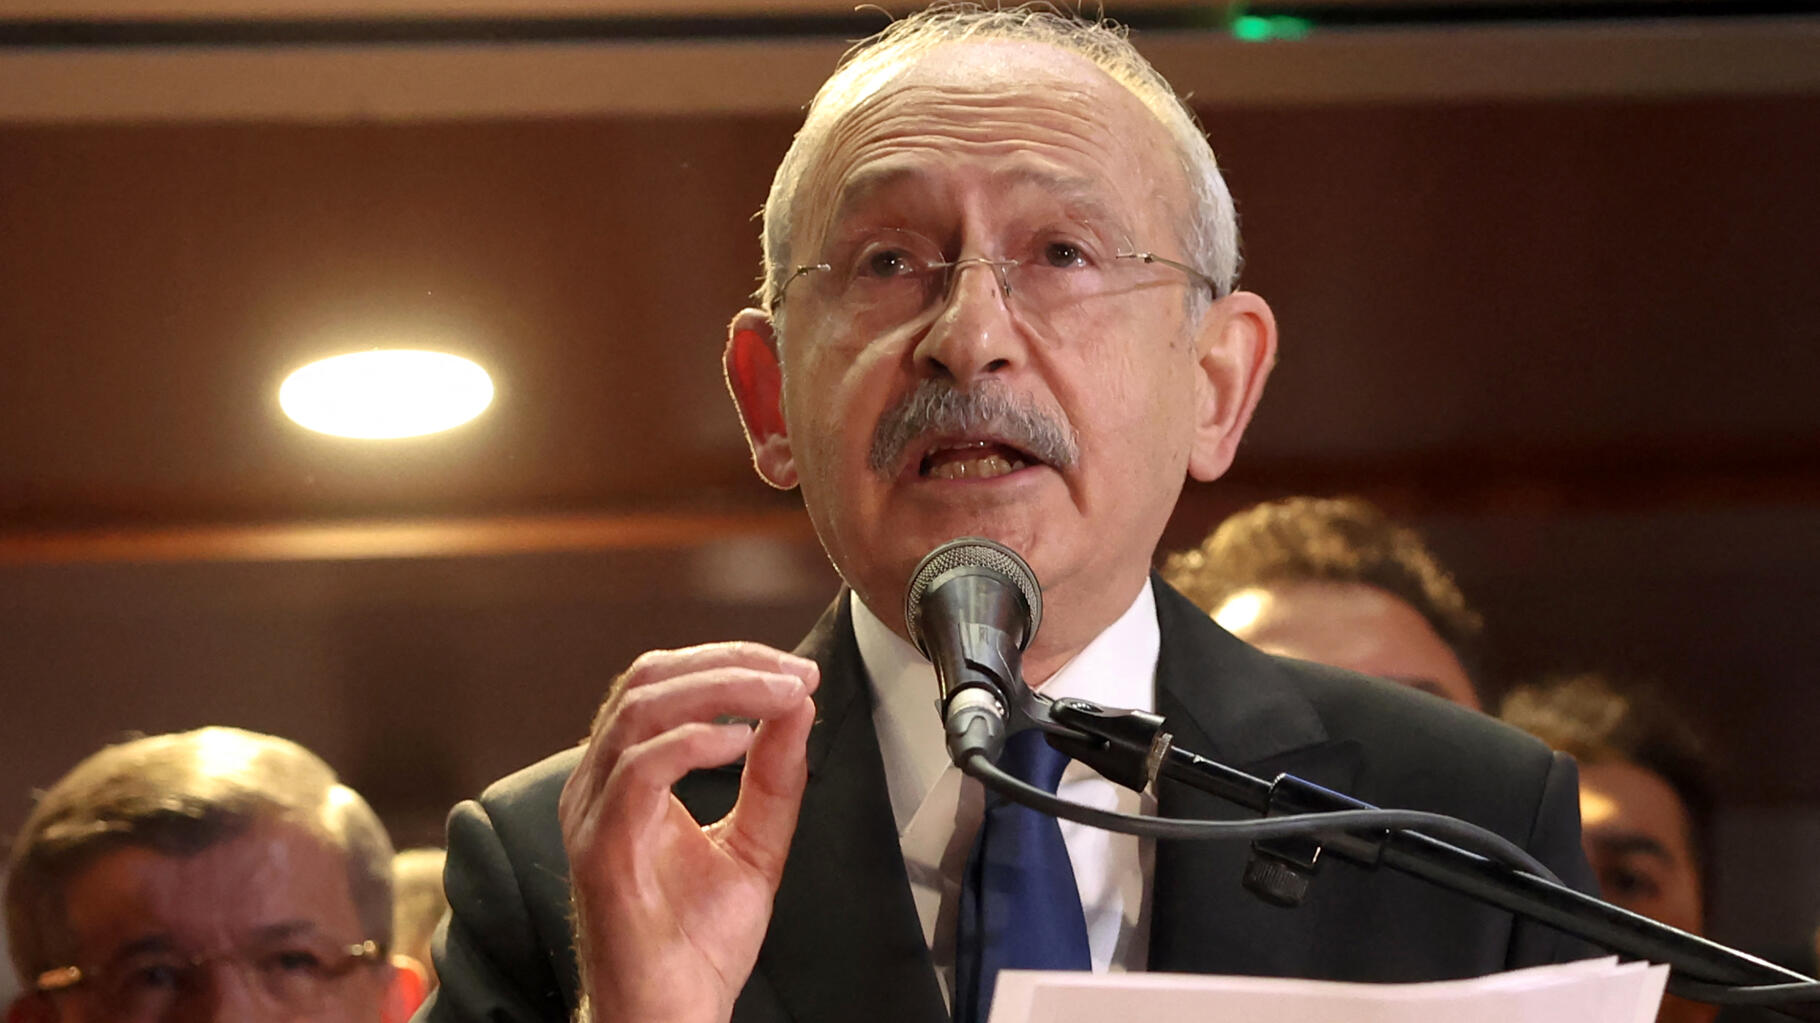 Kemal Kilicdaroglu, Erdogan’s main opponent in the upcoming presidential elections